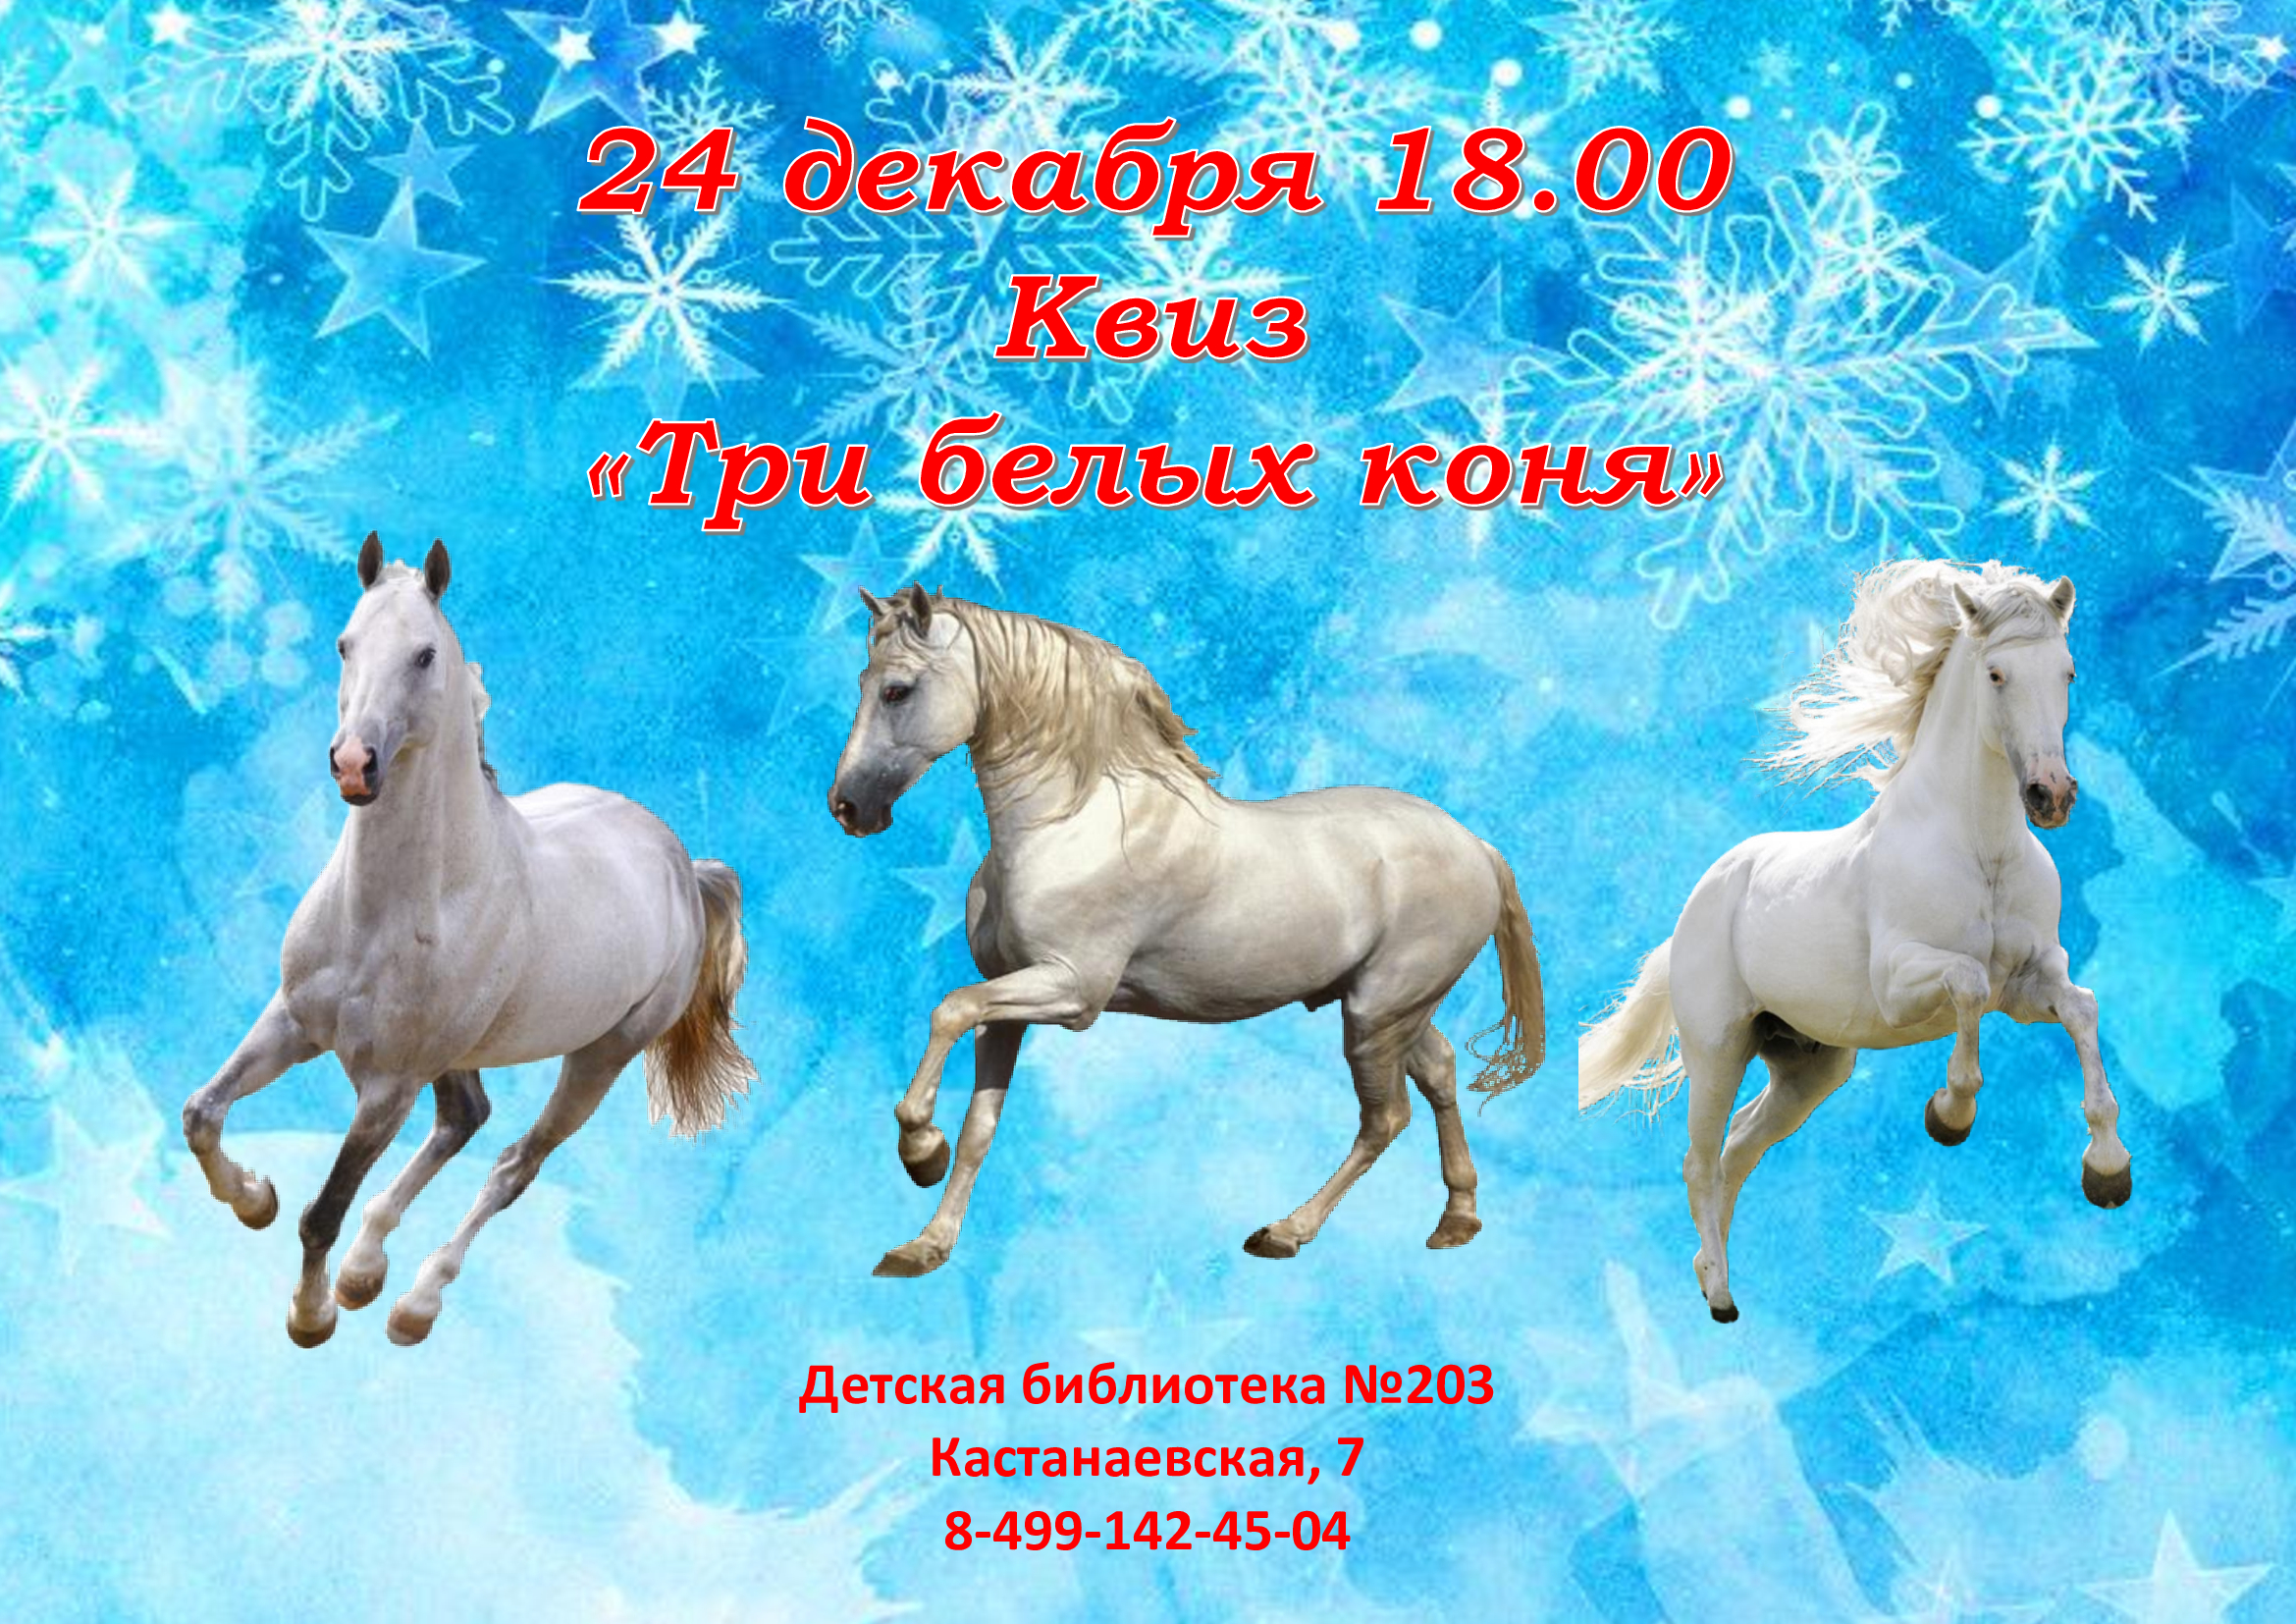 Слова песен три коня. Три белых коня. Три белых коня декабрь. Три белых коня декабрь январь и февраль. Три коня декабрь январь.